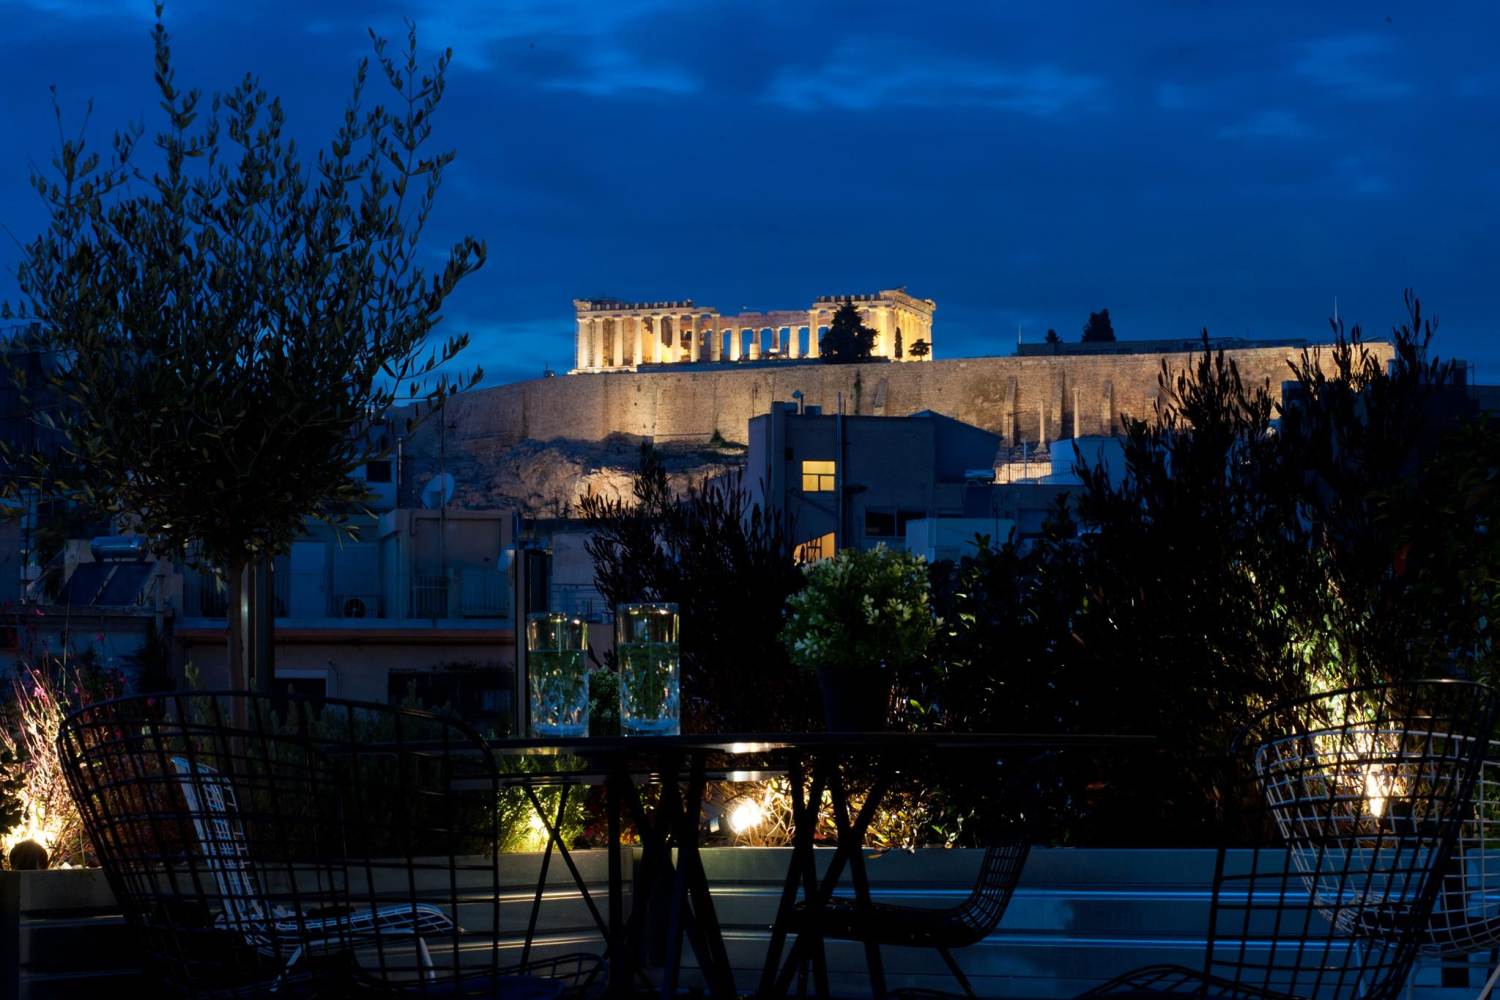 B4B Athens Signature Hotel, Attica - Greece